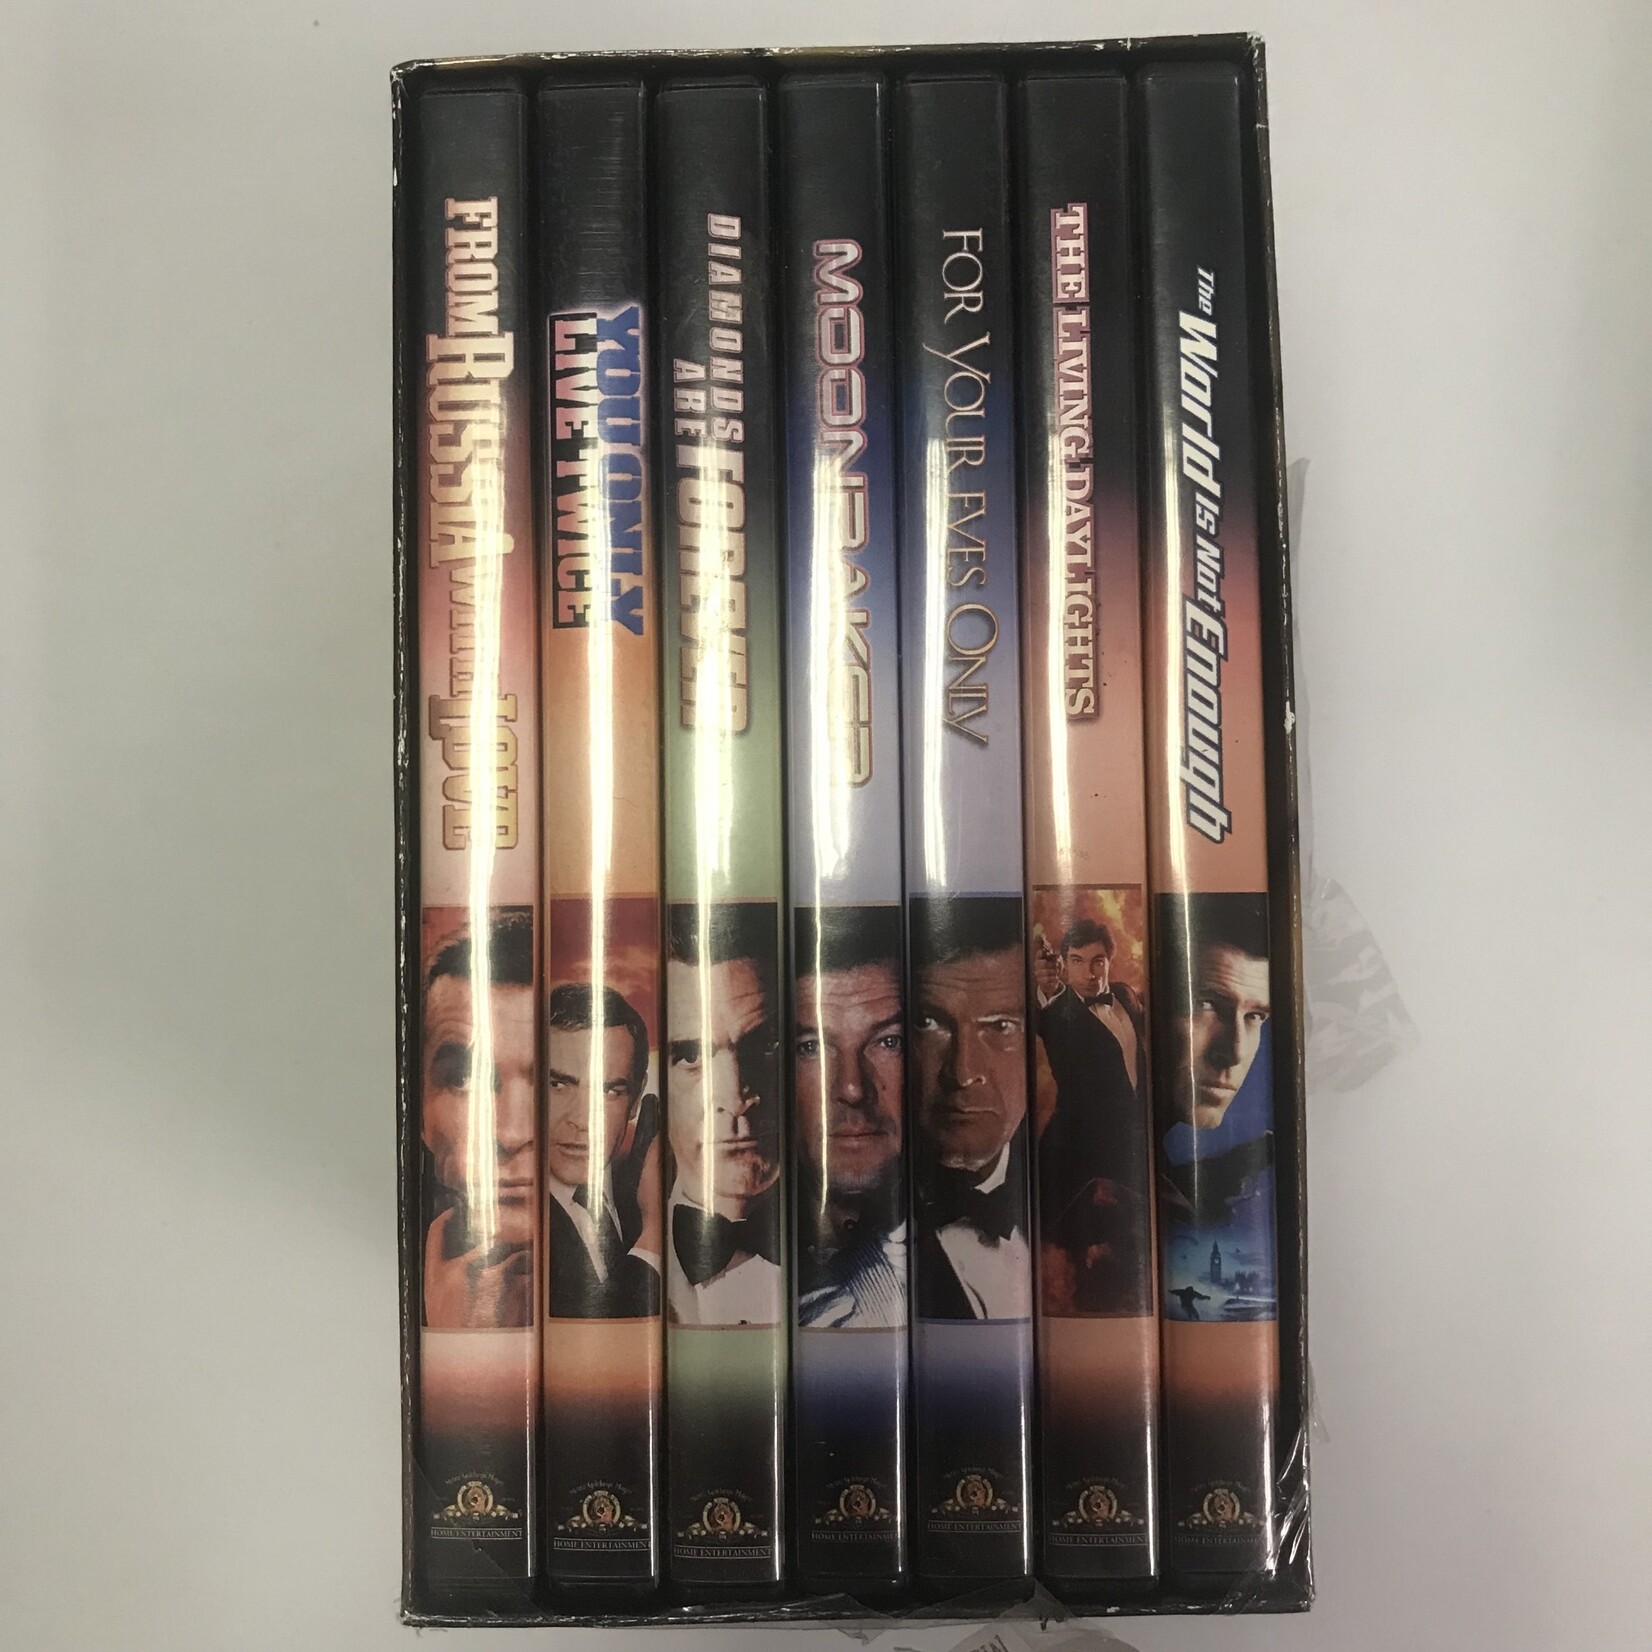 James Bond — 007 Special Edition Volume 2 - DVD Box Set (USED)